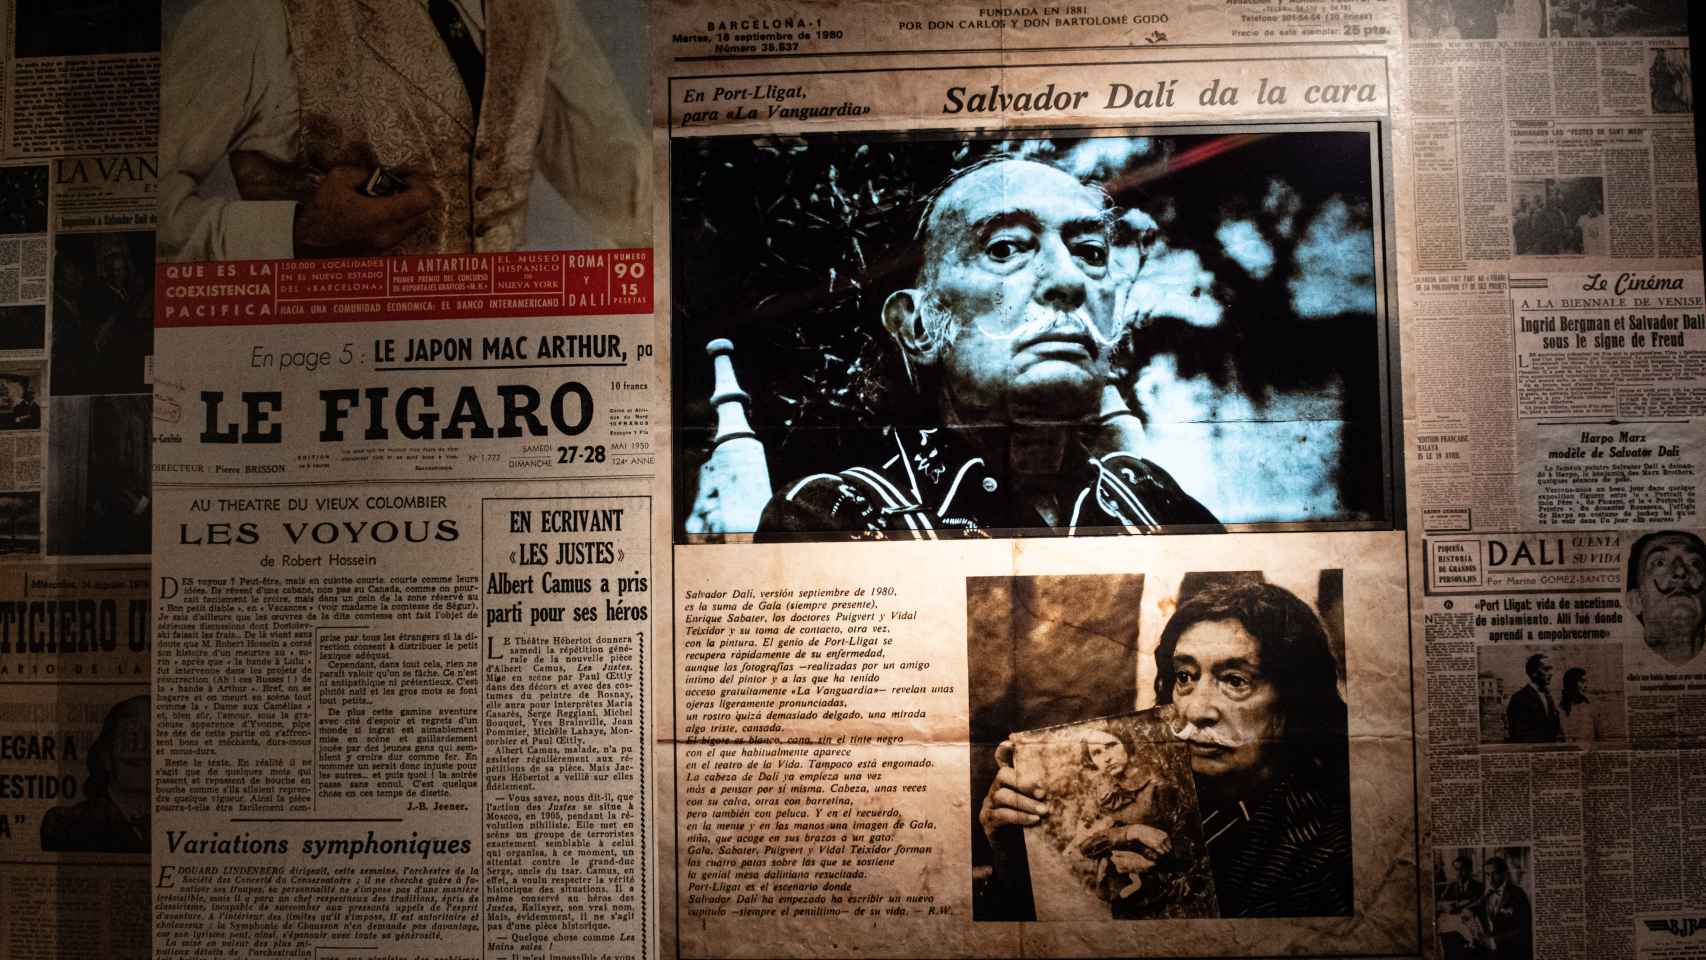 Recorte de periódico de Dalí